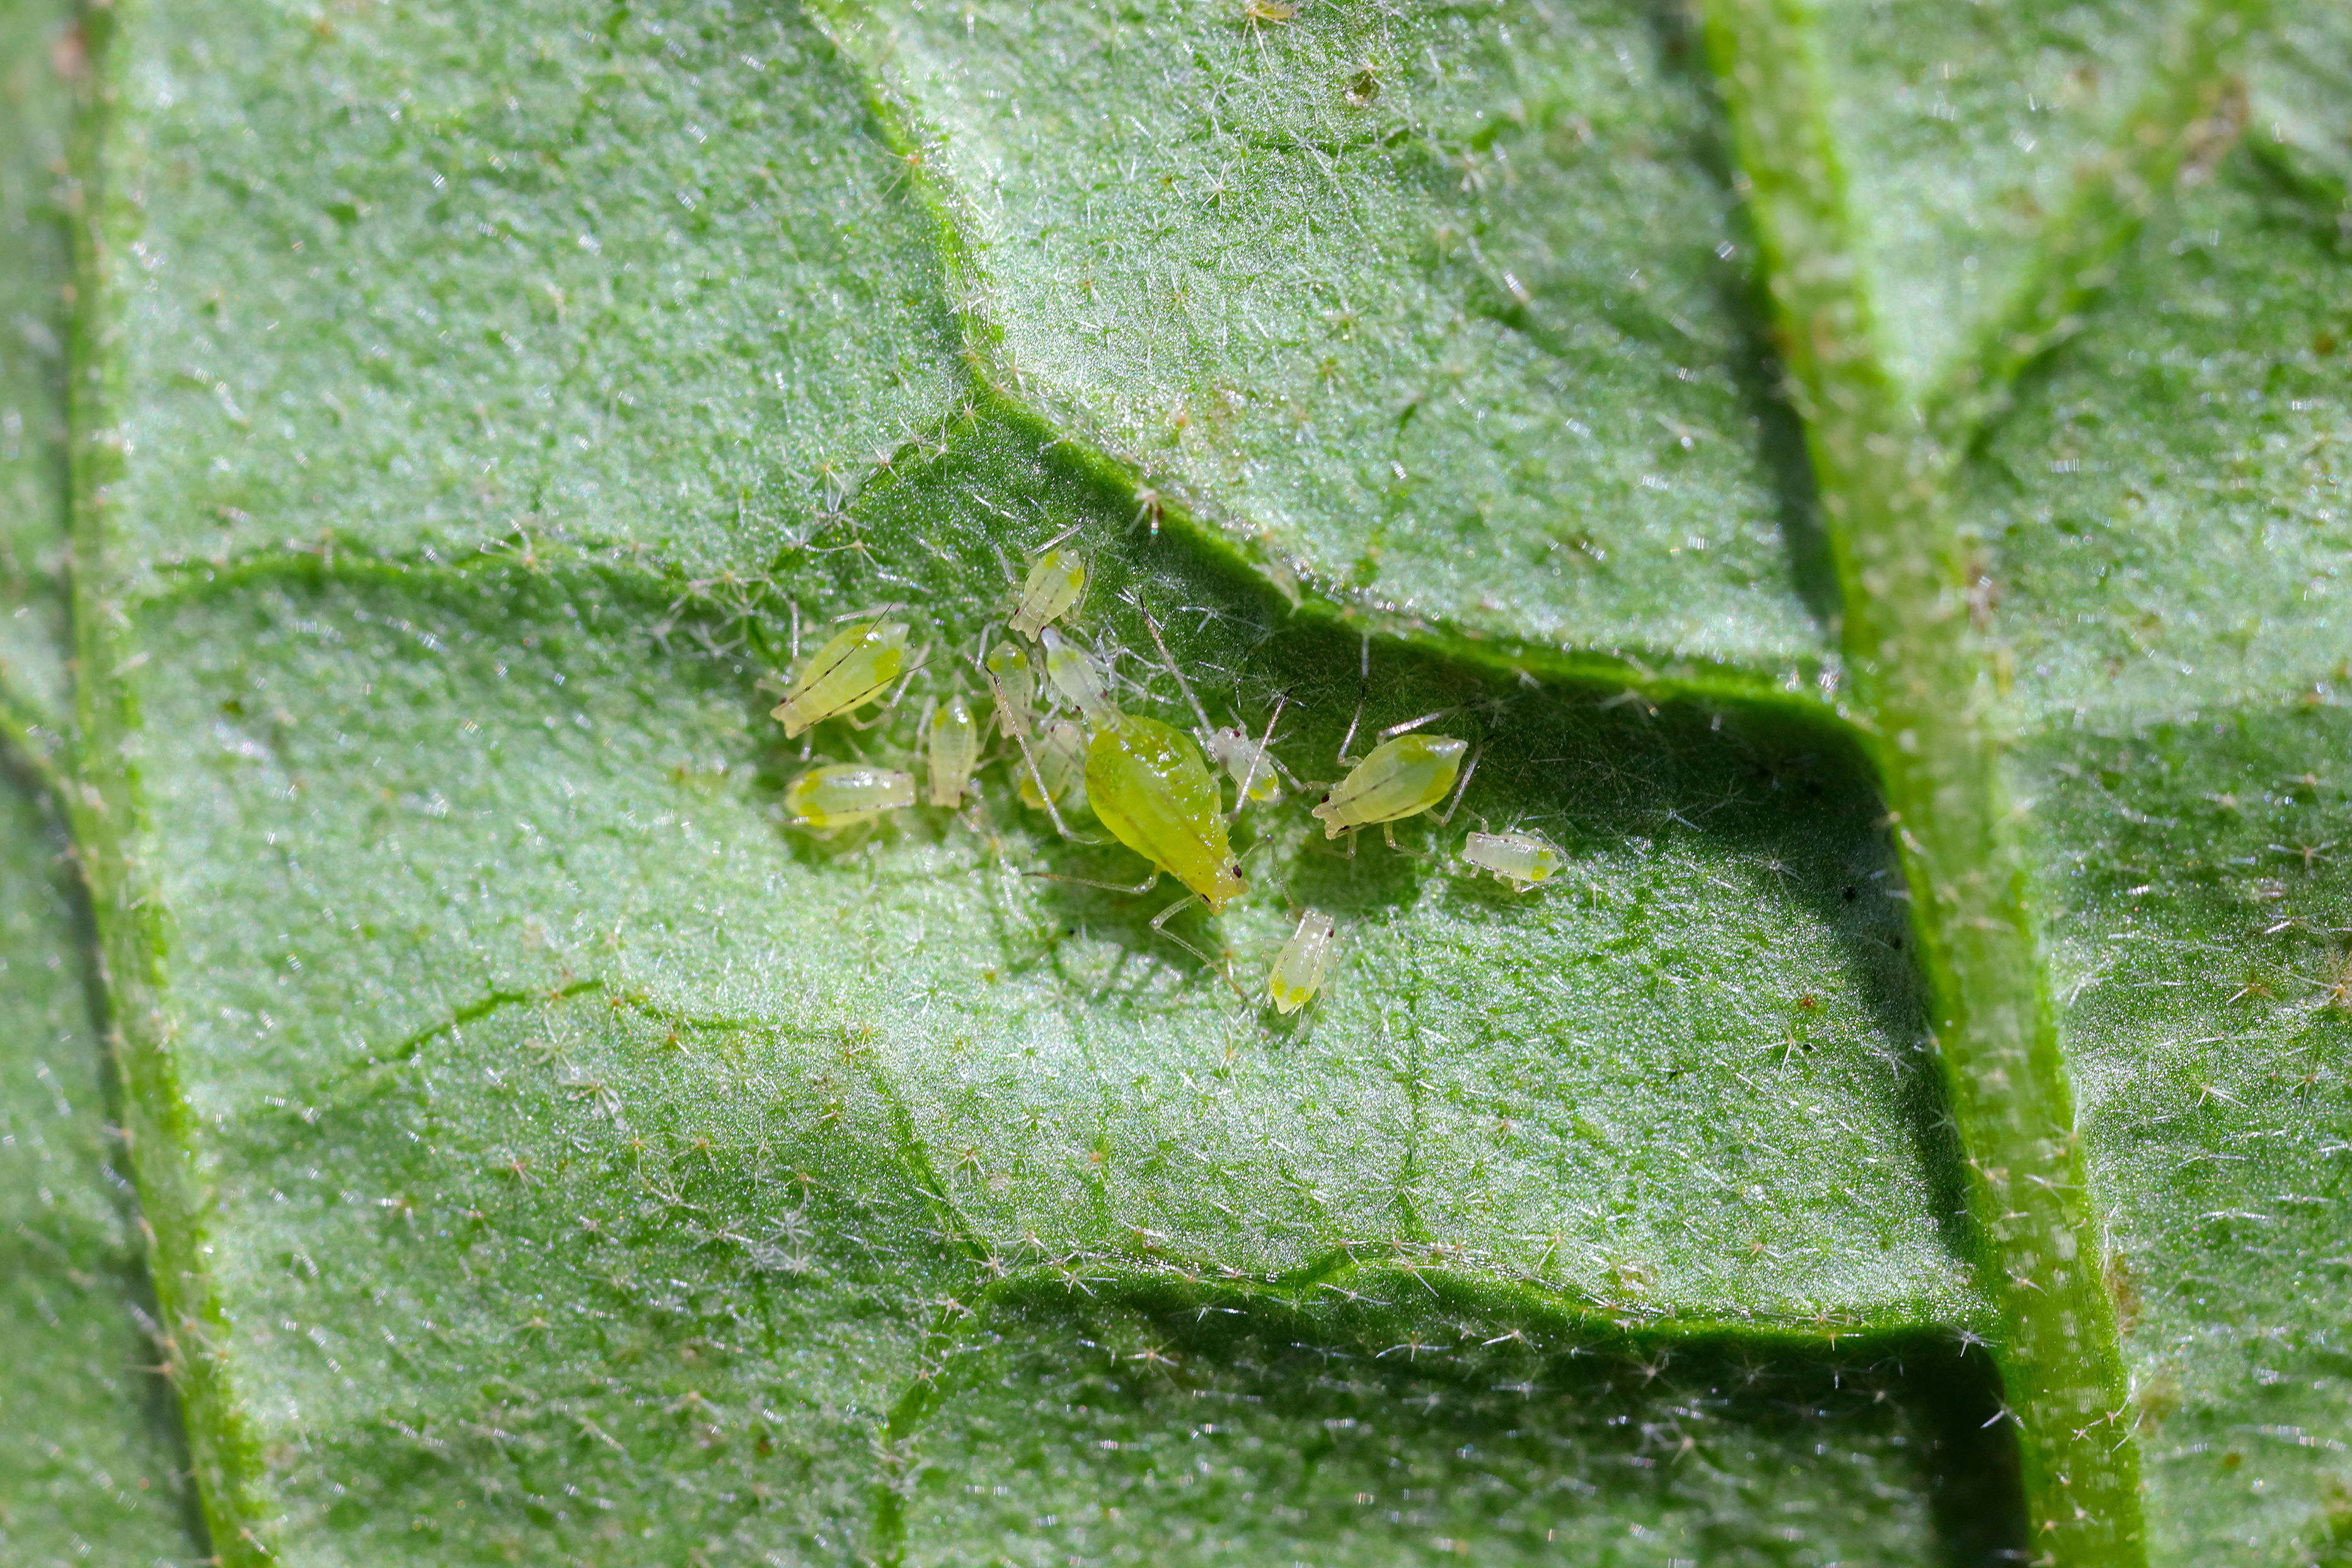 aphids on green potato leaf